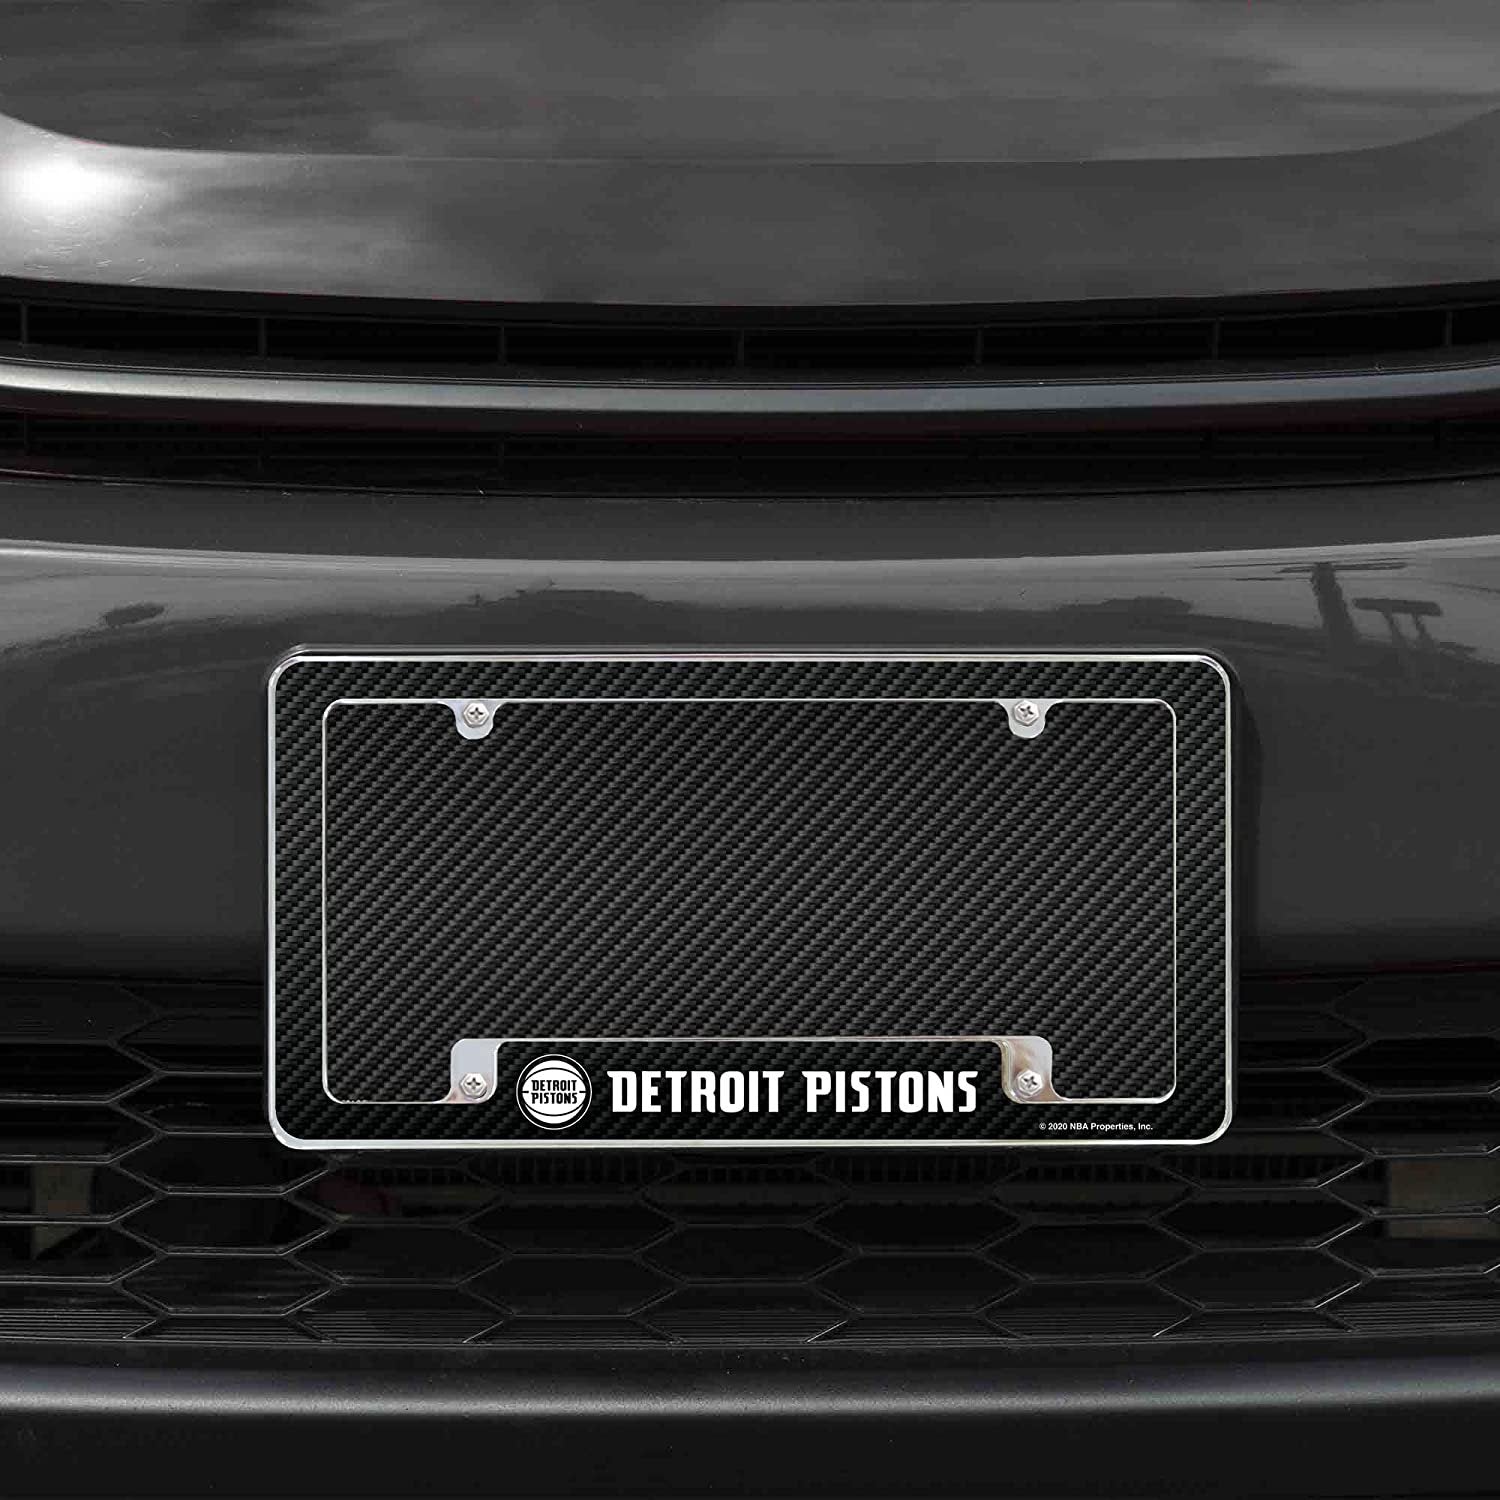 Detroit Pistons Metal License Plate Frame Tag Cover Carbon Fiber Design 12x6 Inch